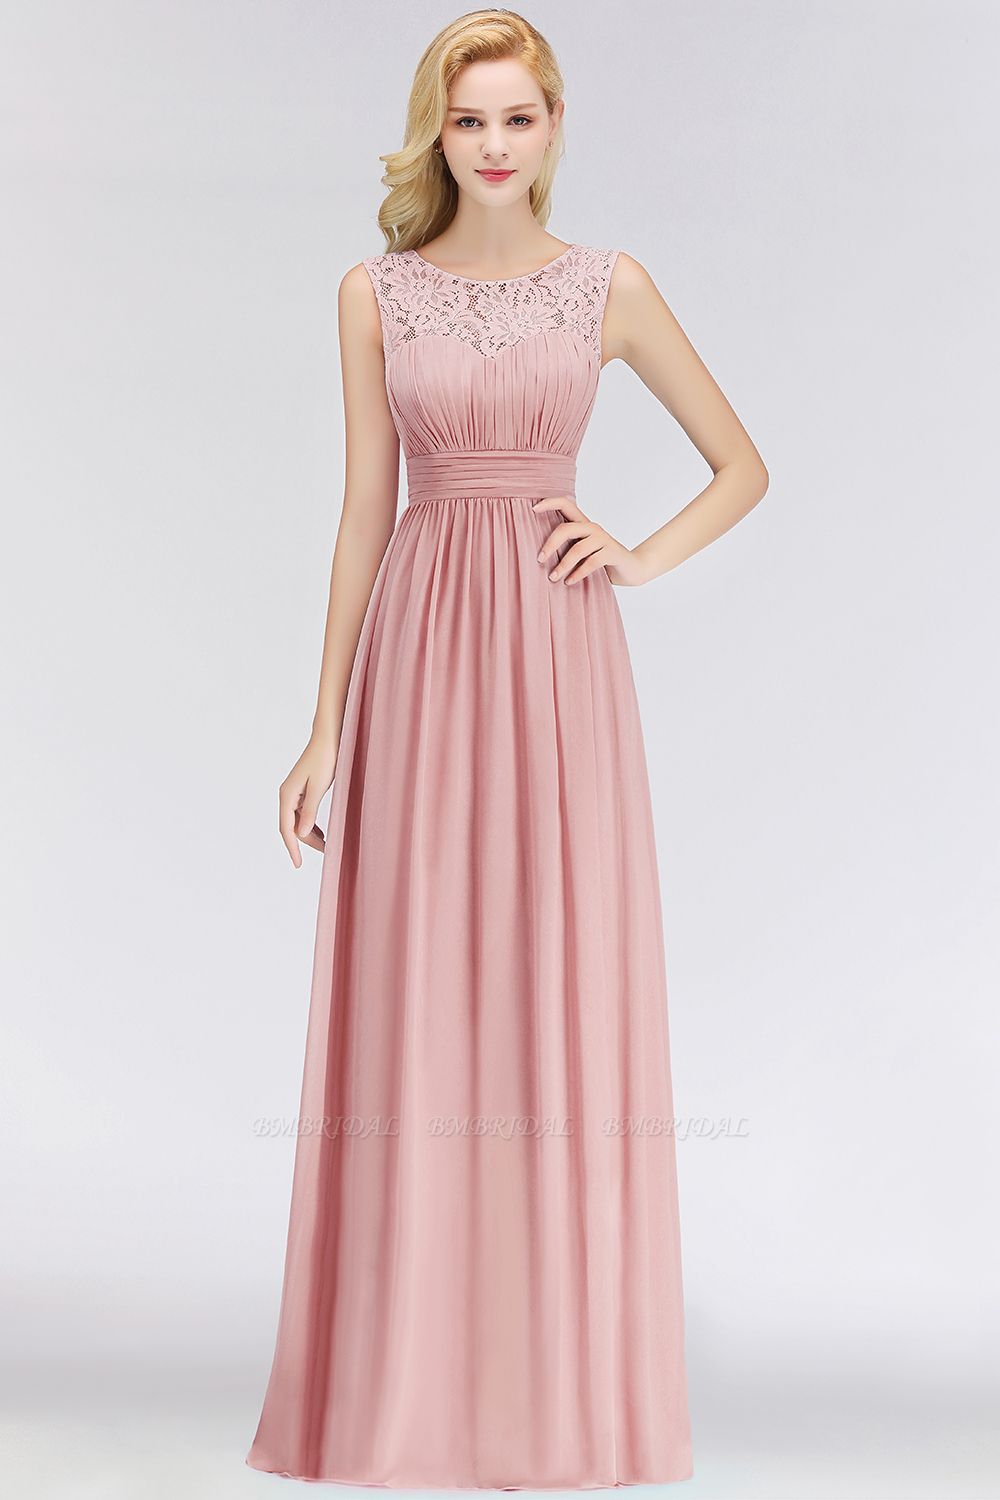 BMbridal Elegant Lace Scoop Bridesmaid Dress Dusty Rose Chiffon Sleeveless Wedding party Dress